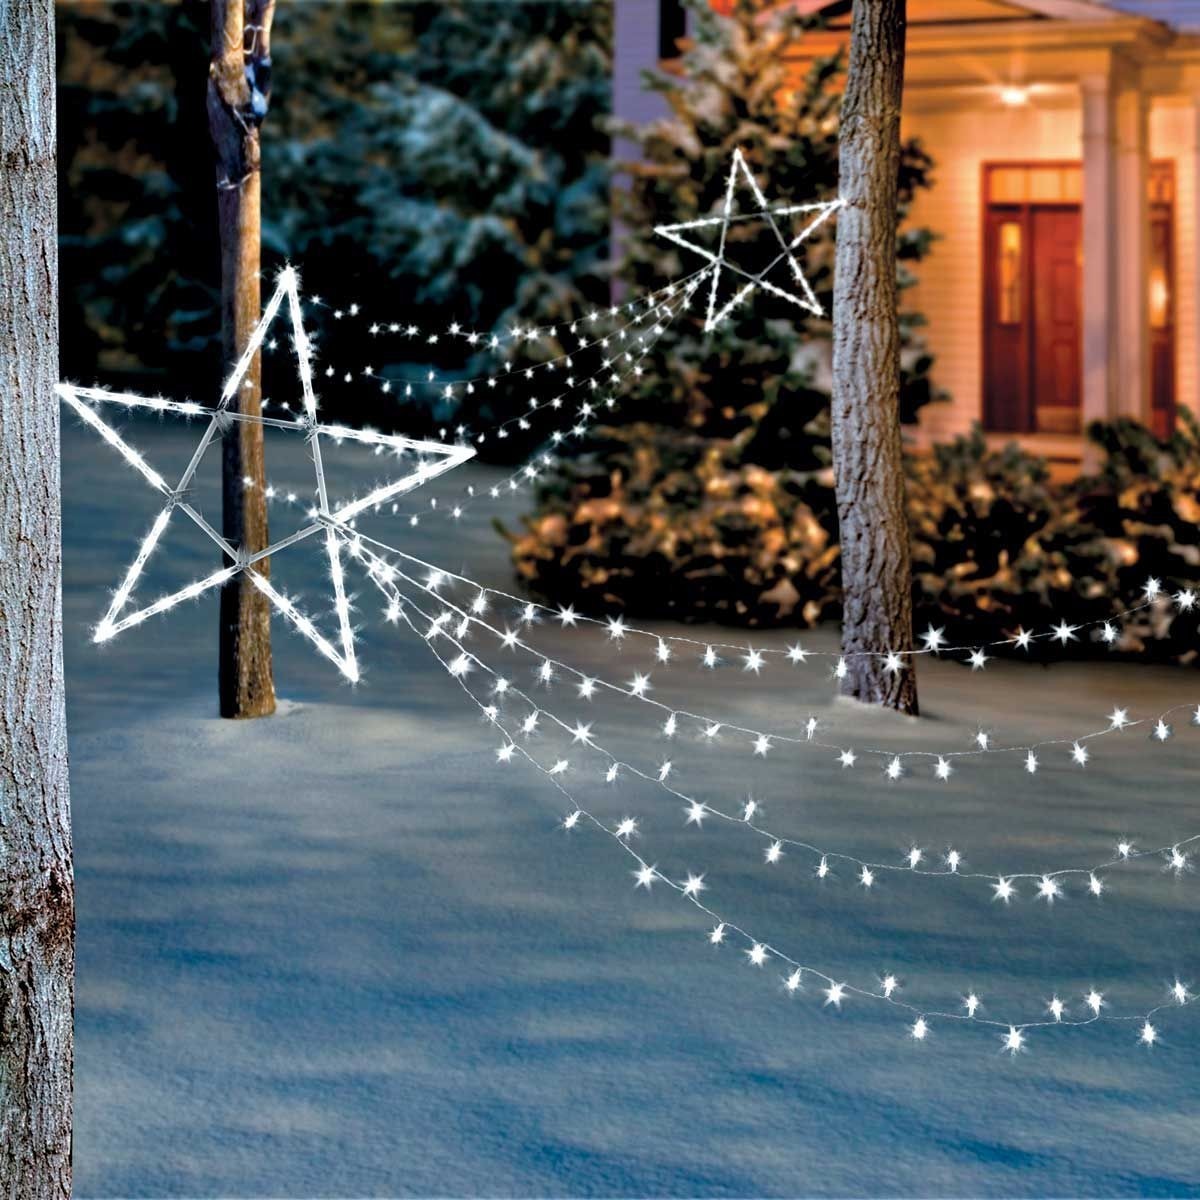 Led Shooting Star Light Set Christmas Holiday Outdoor Yard Art Decoration New